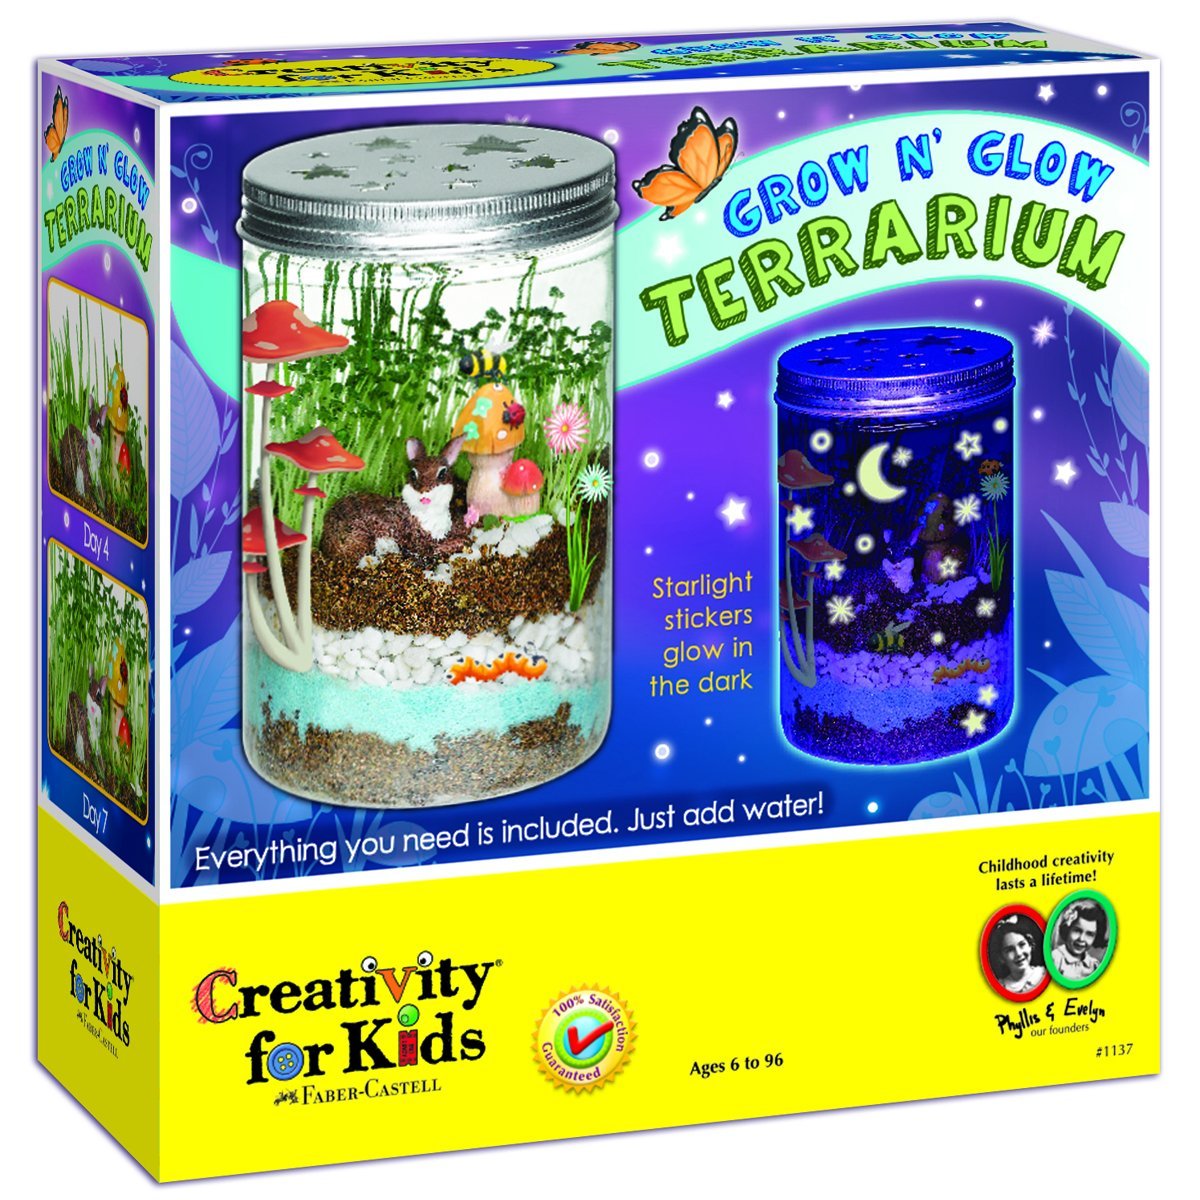 Creativity for Kids Grow n Glow Terrarium